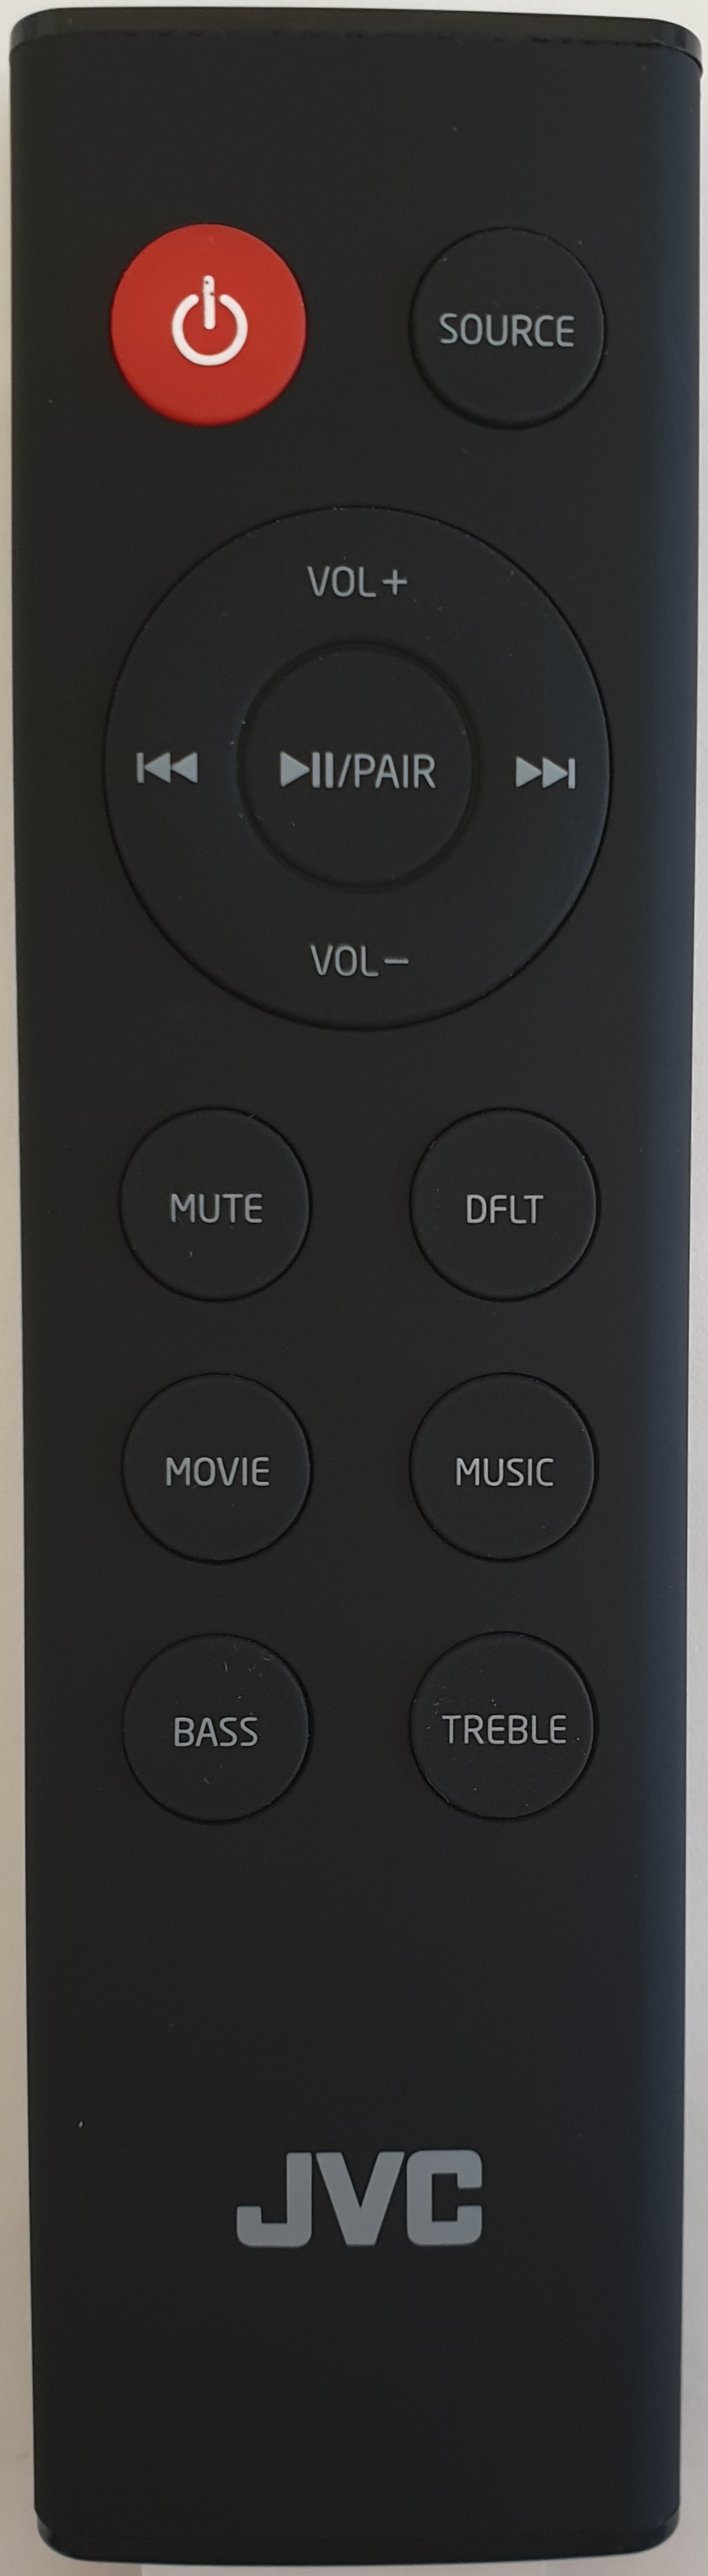 JVC TH-D227B Remote Control Original 